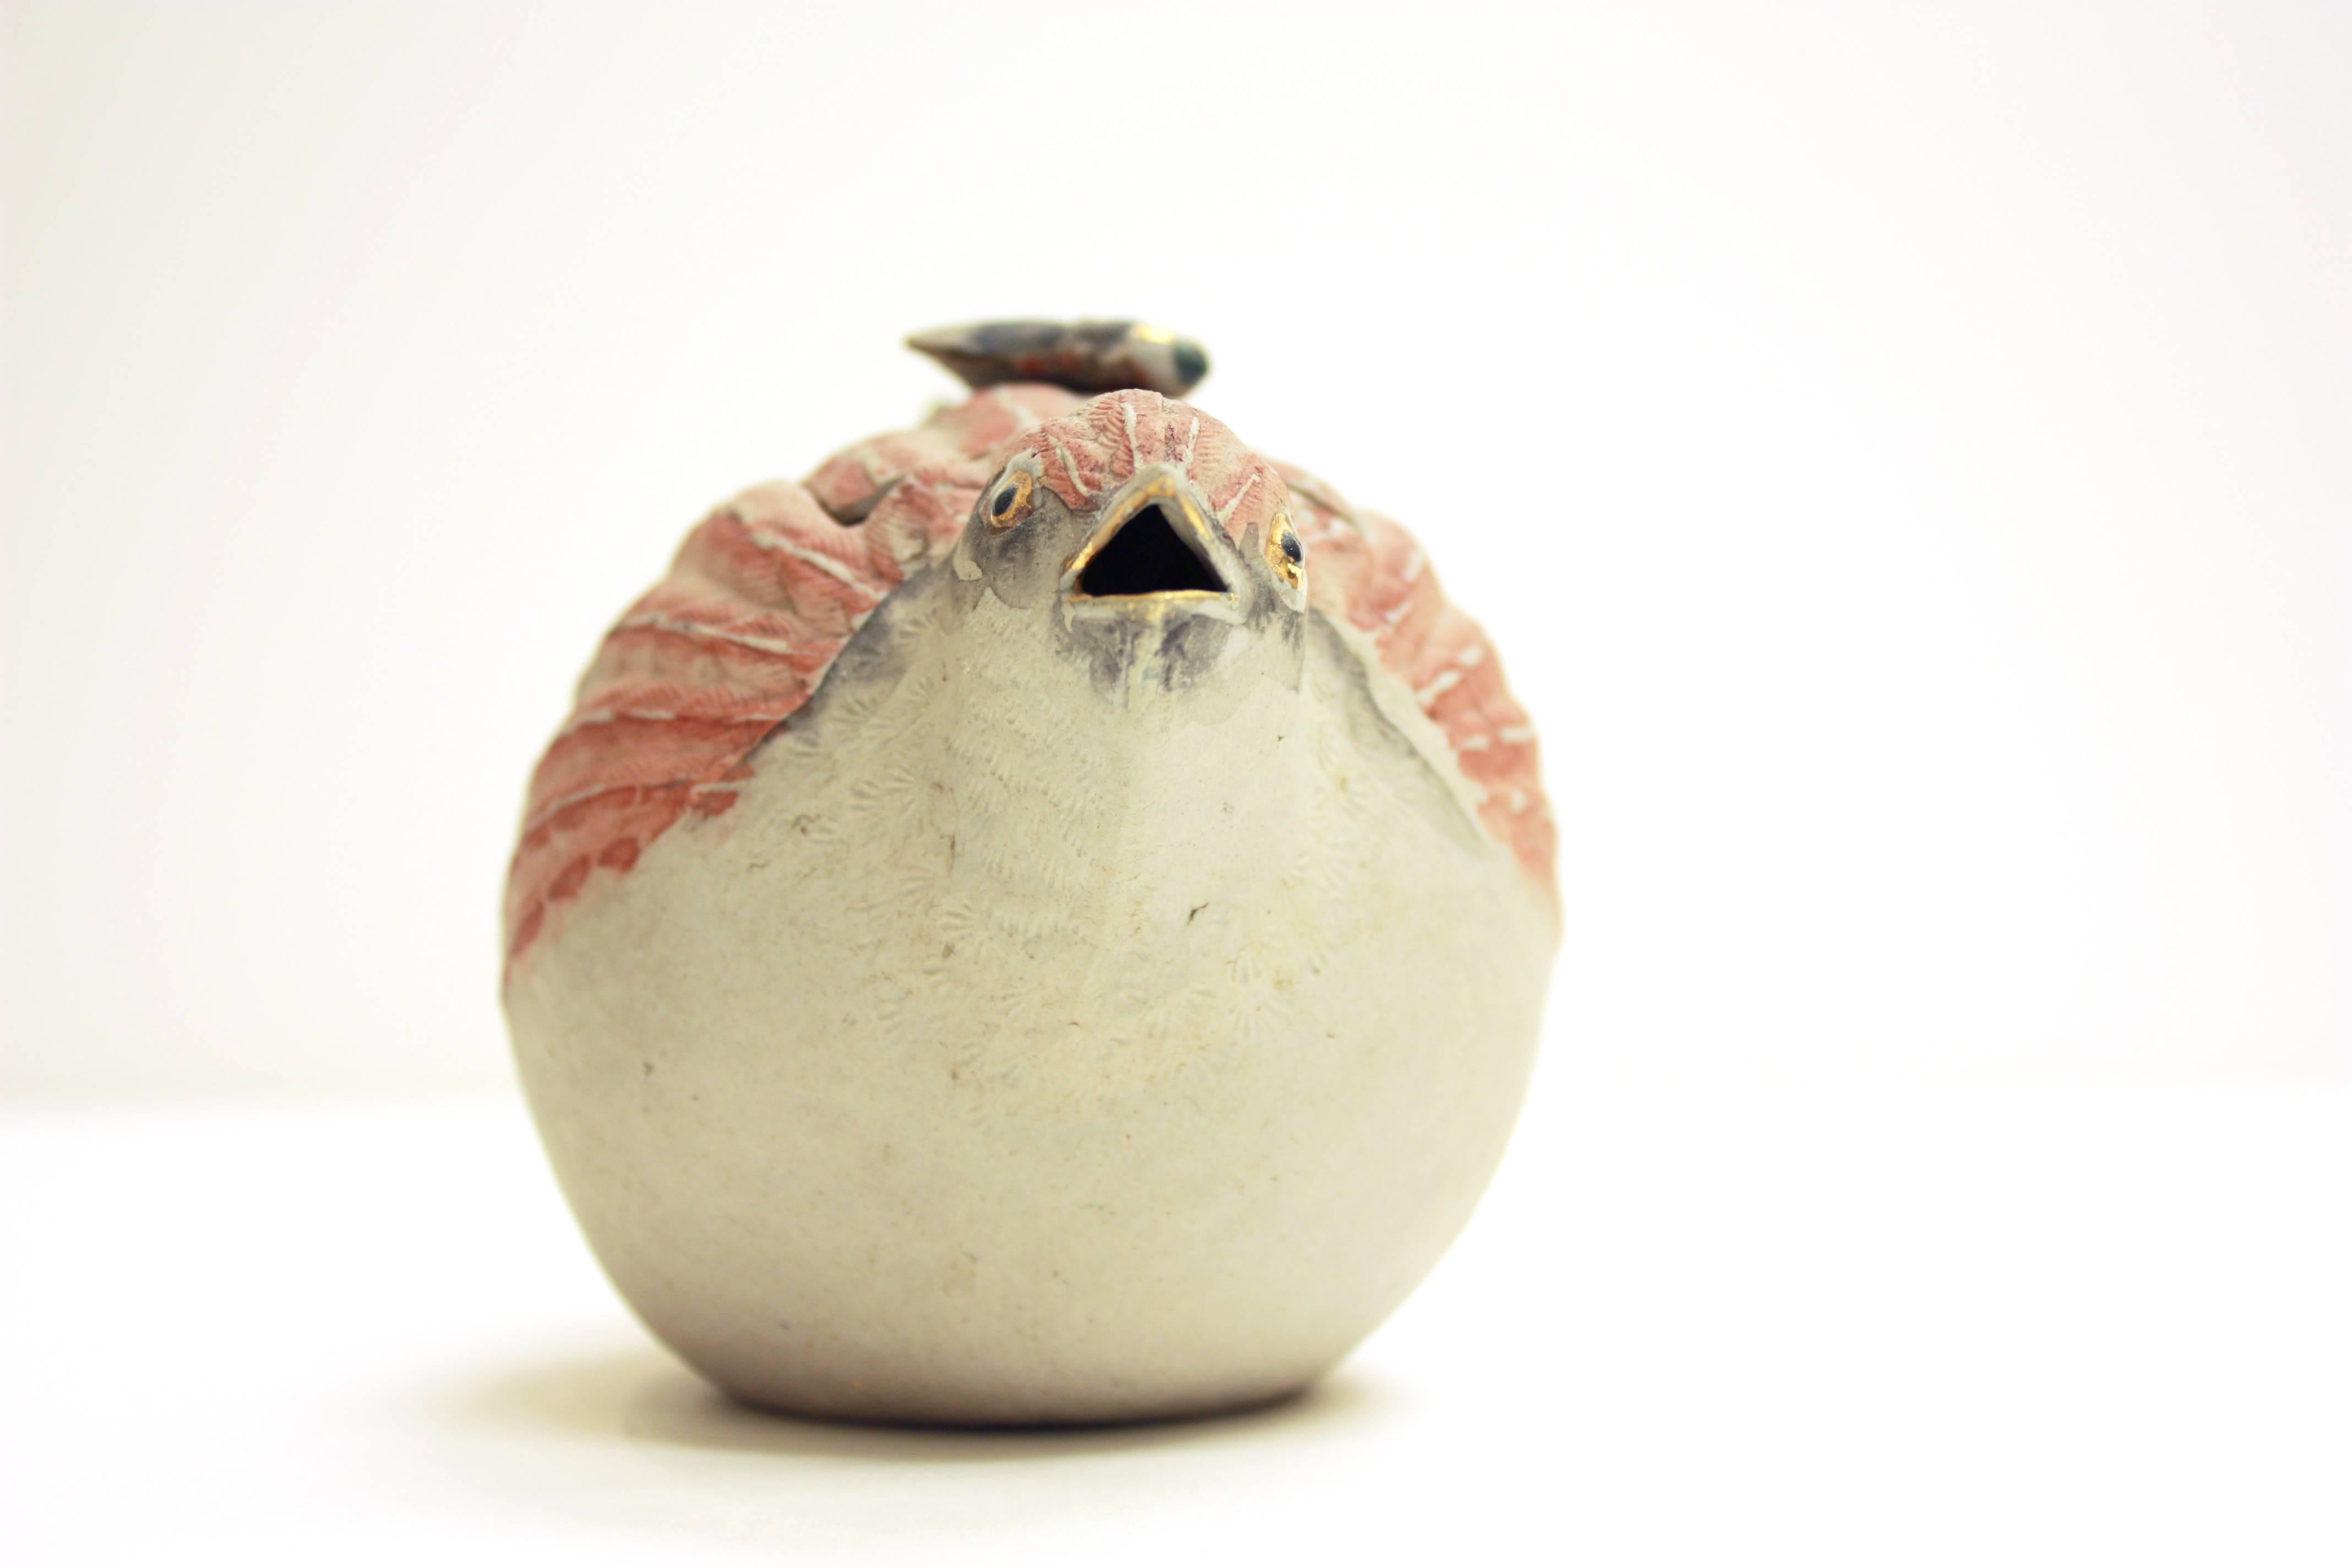 Banko Earthenware Teapot 19th Century Meiji Japanese Ceramics, Quail & Fly, Cute